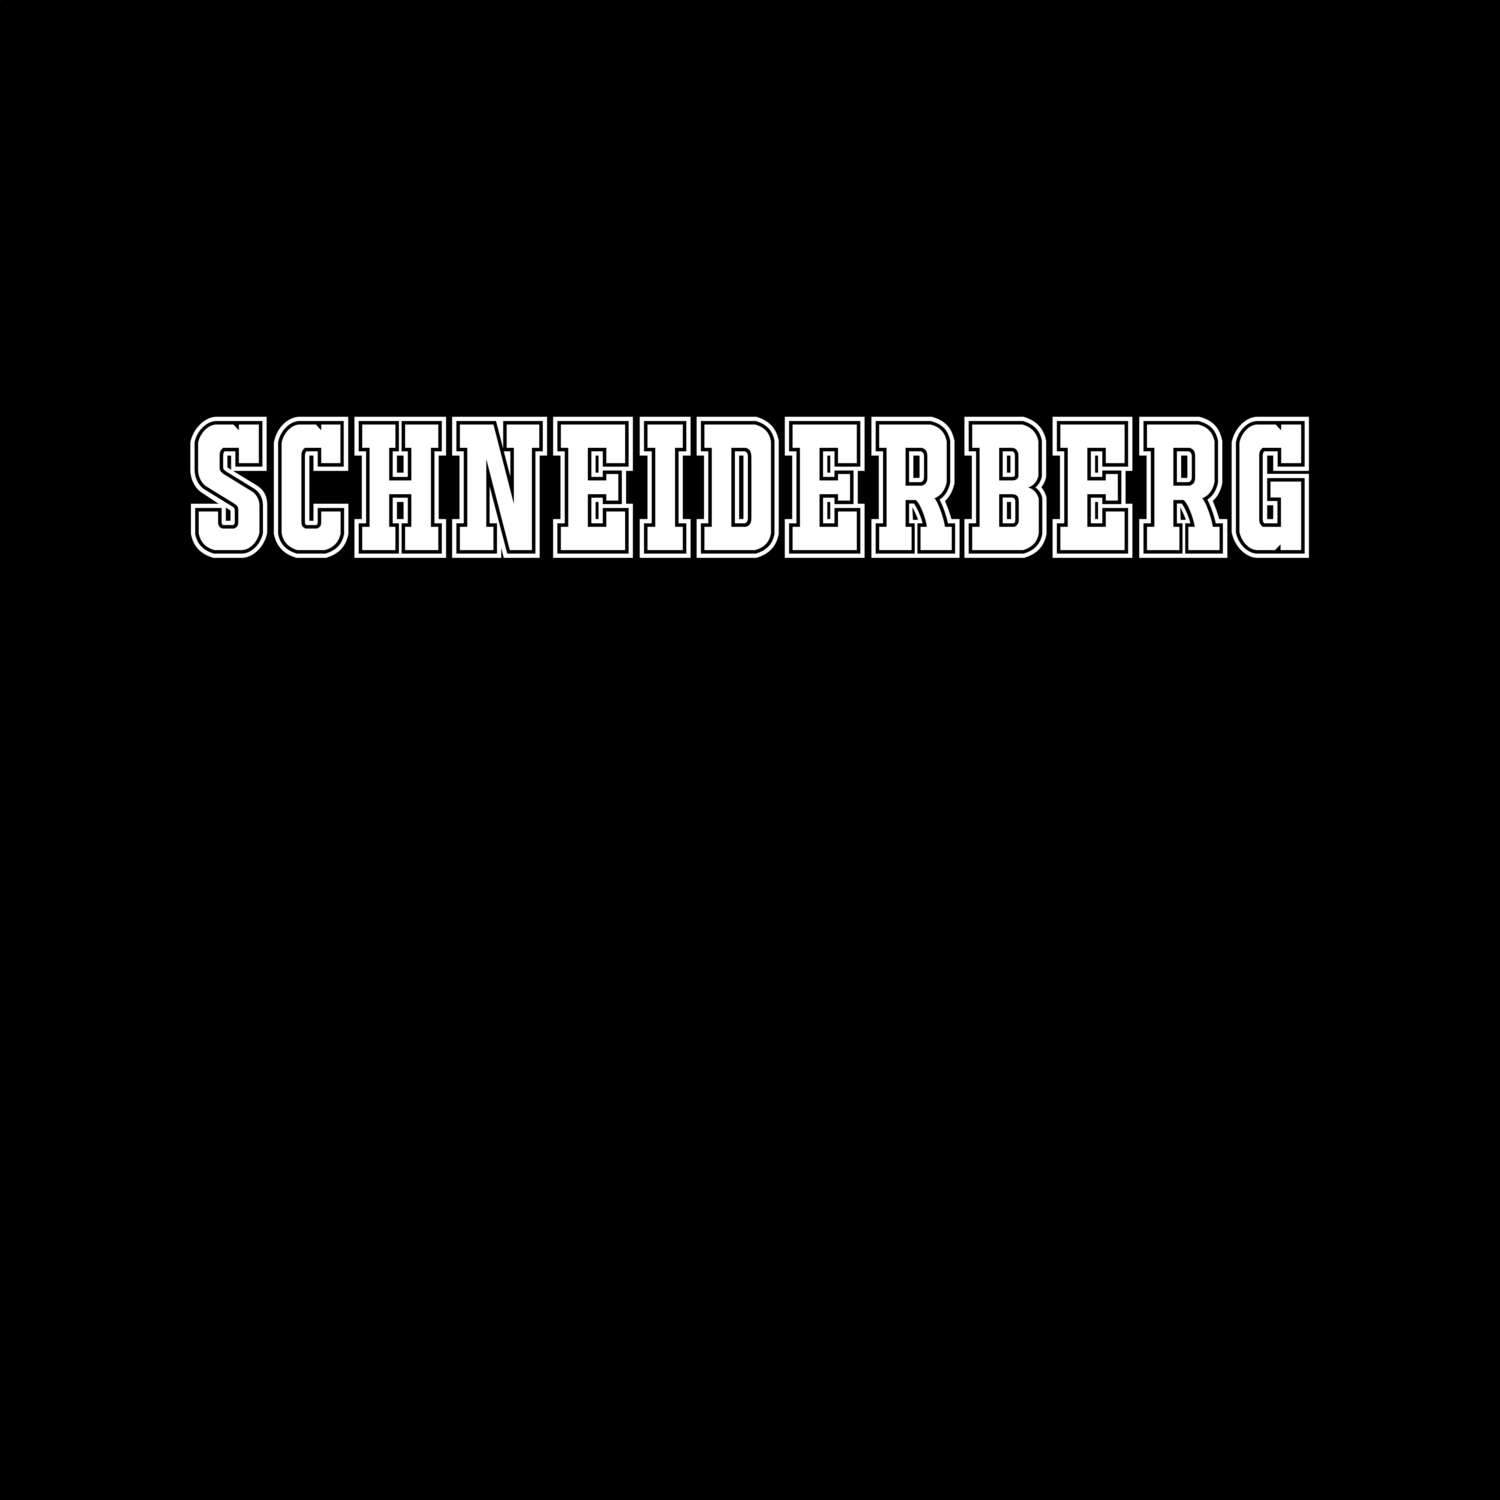 Schneiderberg T-Shirt »Classic«